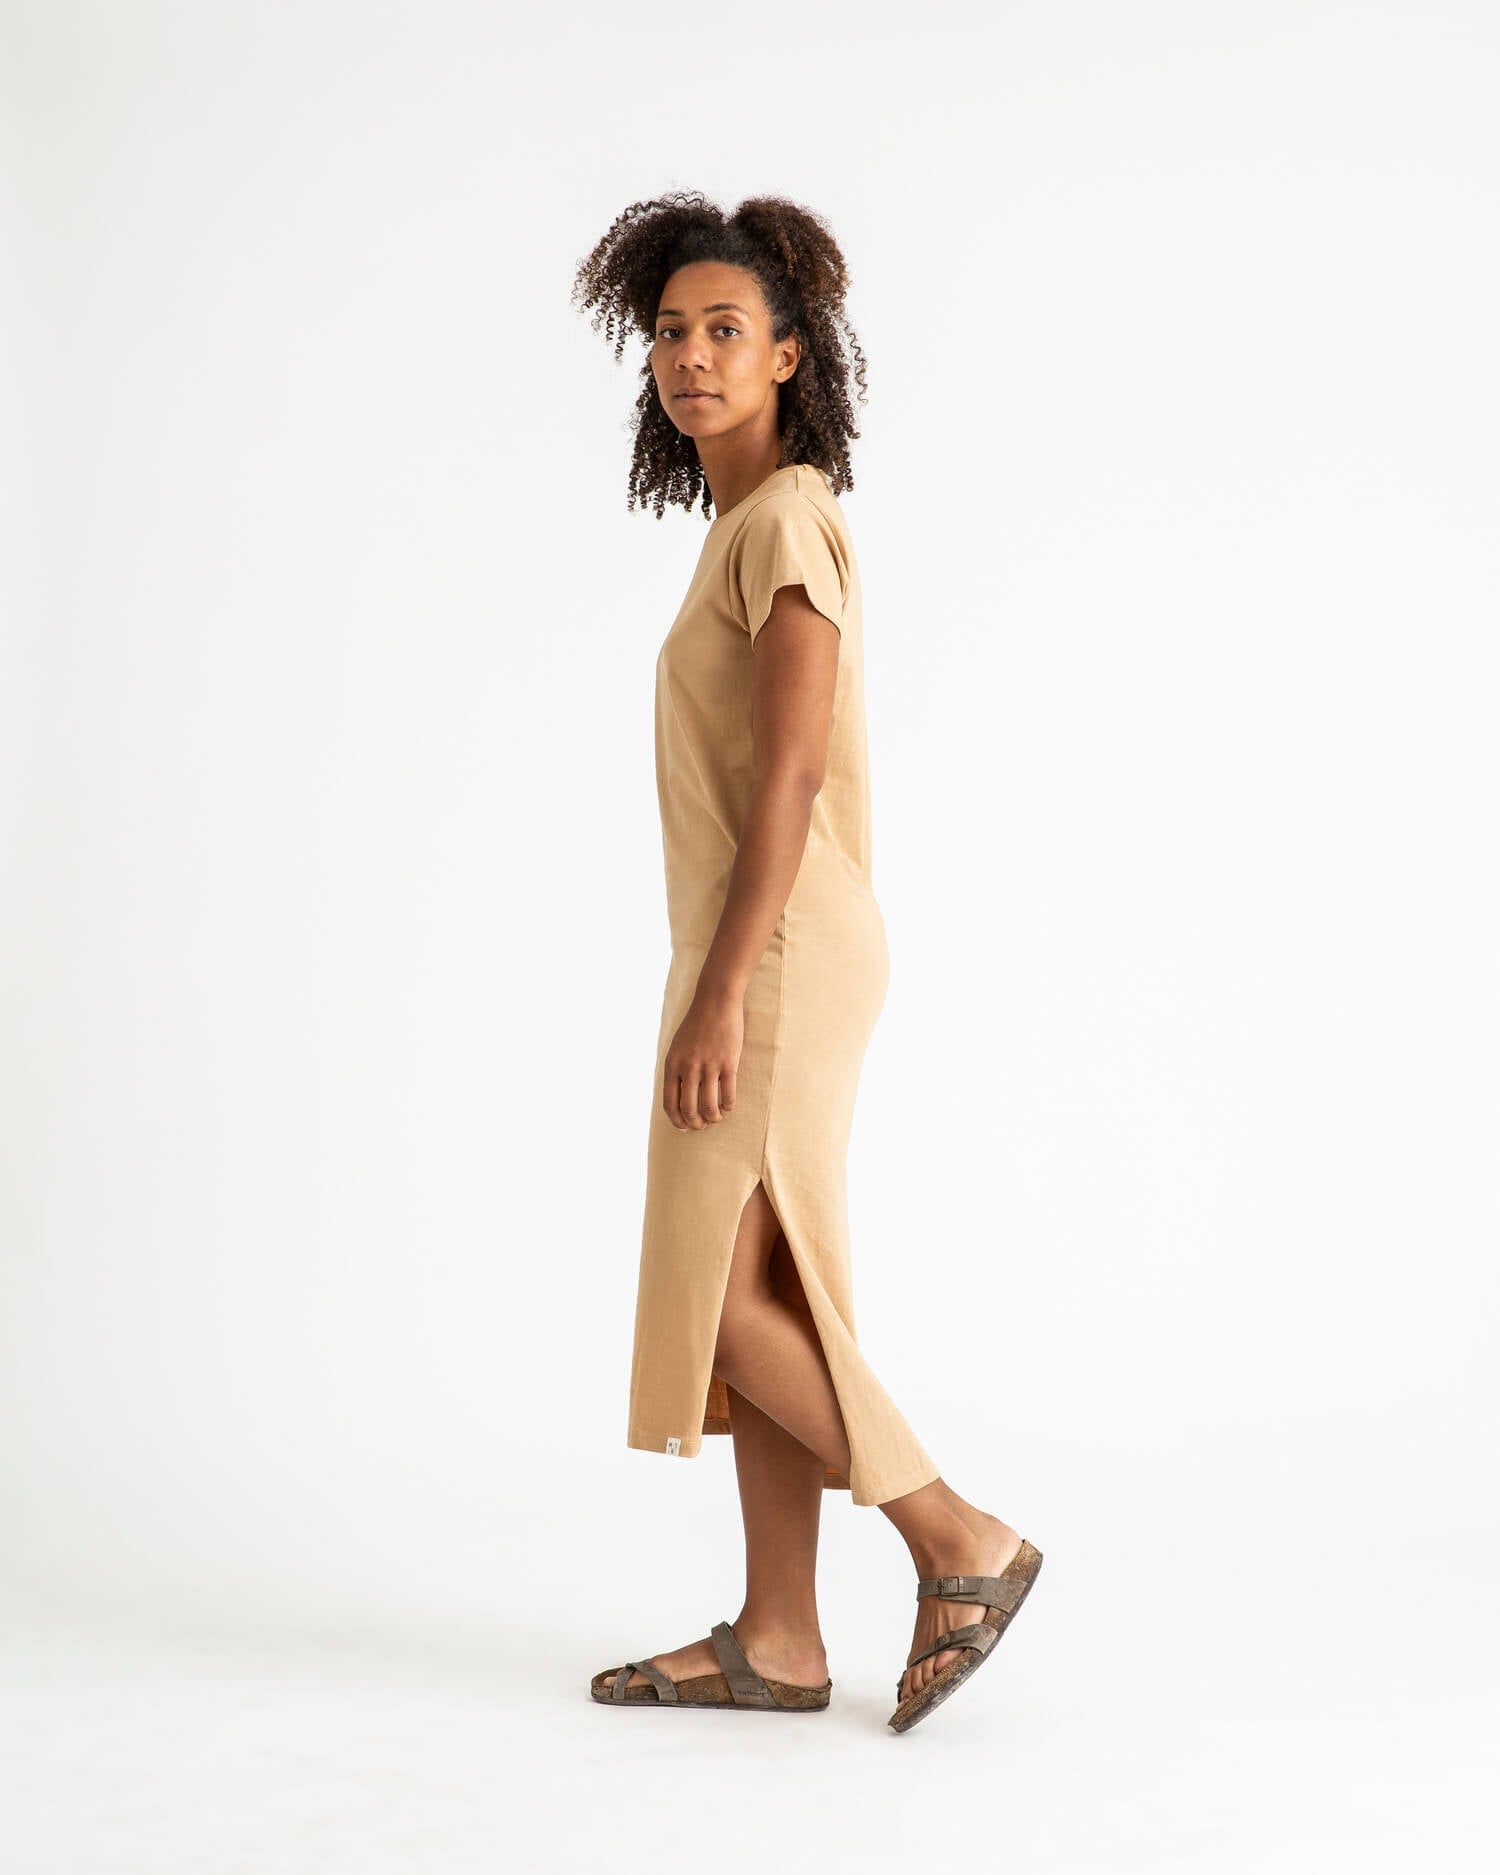 Light brown, short-sleeved dress made of organic cotton from Matona